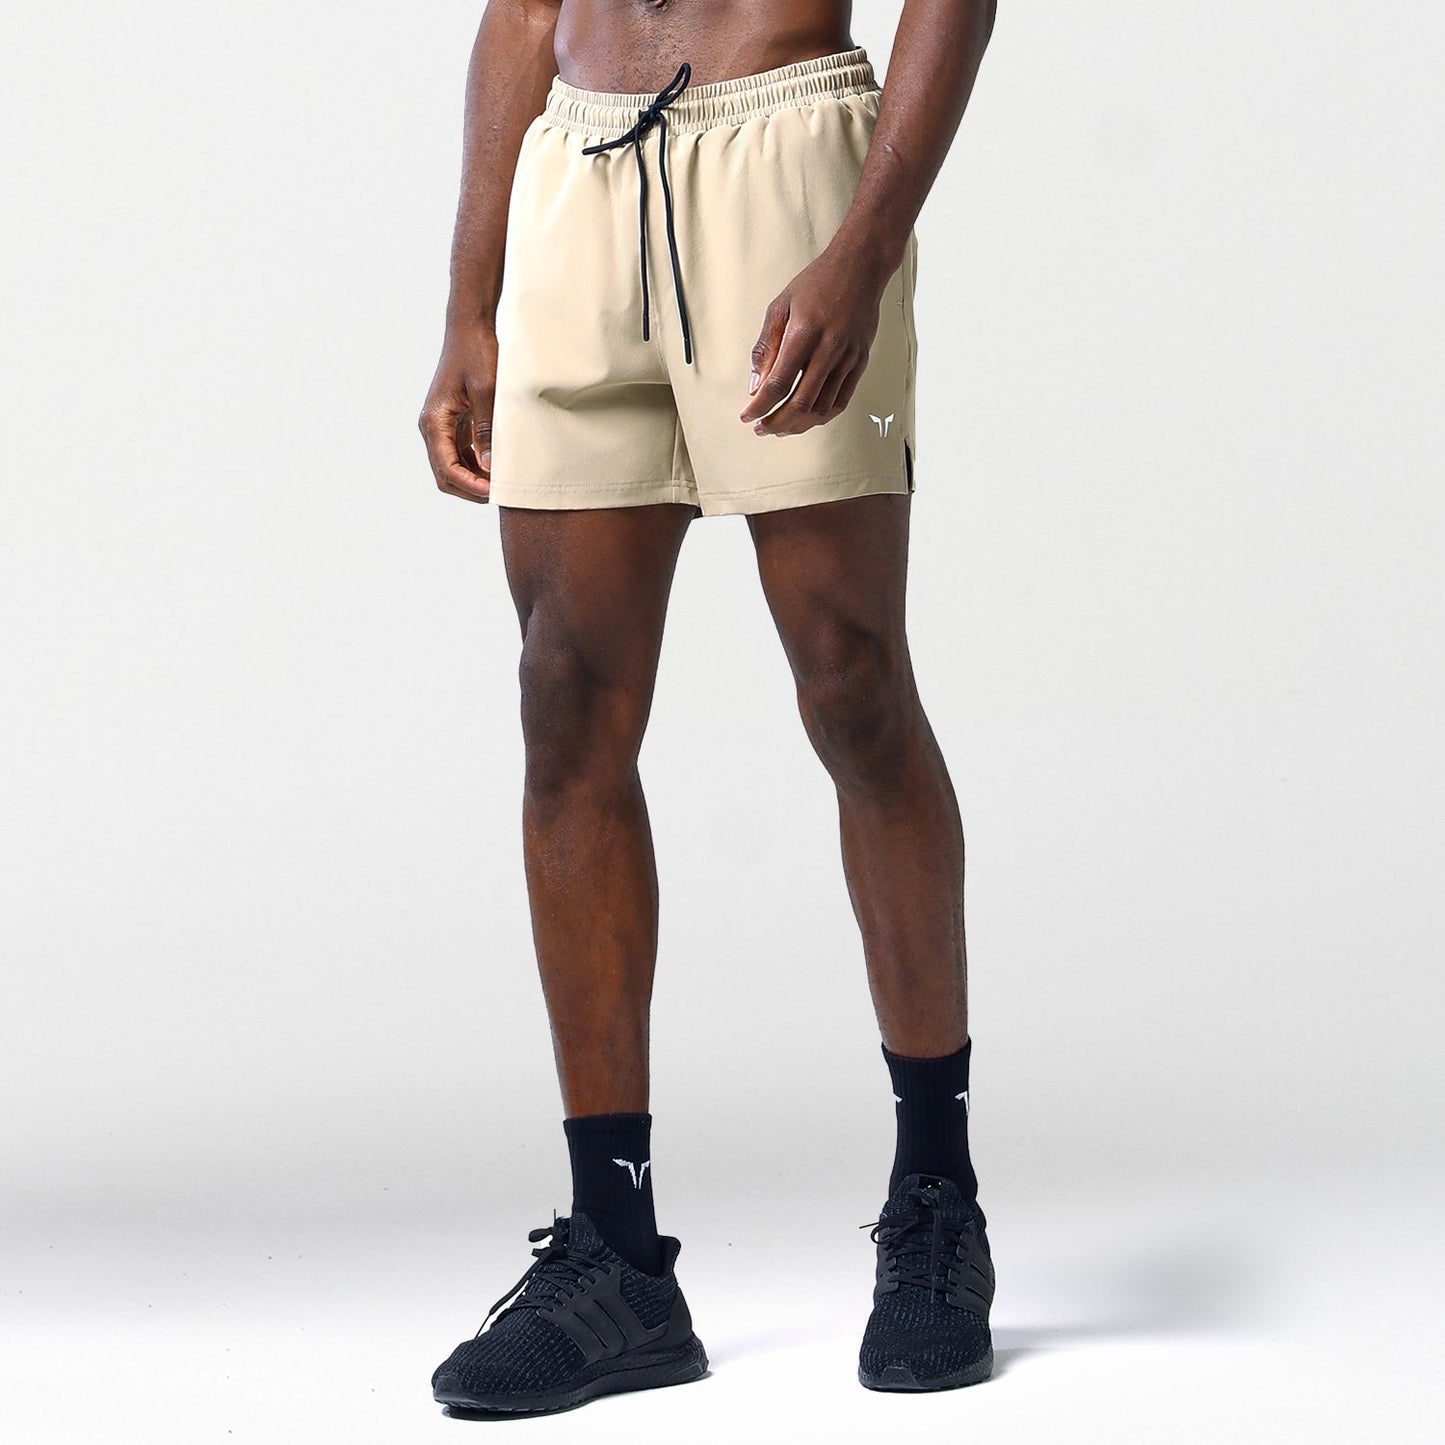 squatwolf-gym-wear-essential-5-inch-shorts-bundle-1-workout-short-for-men